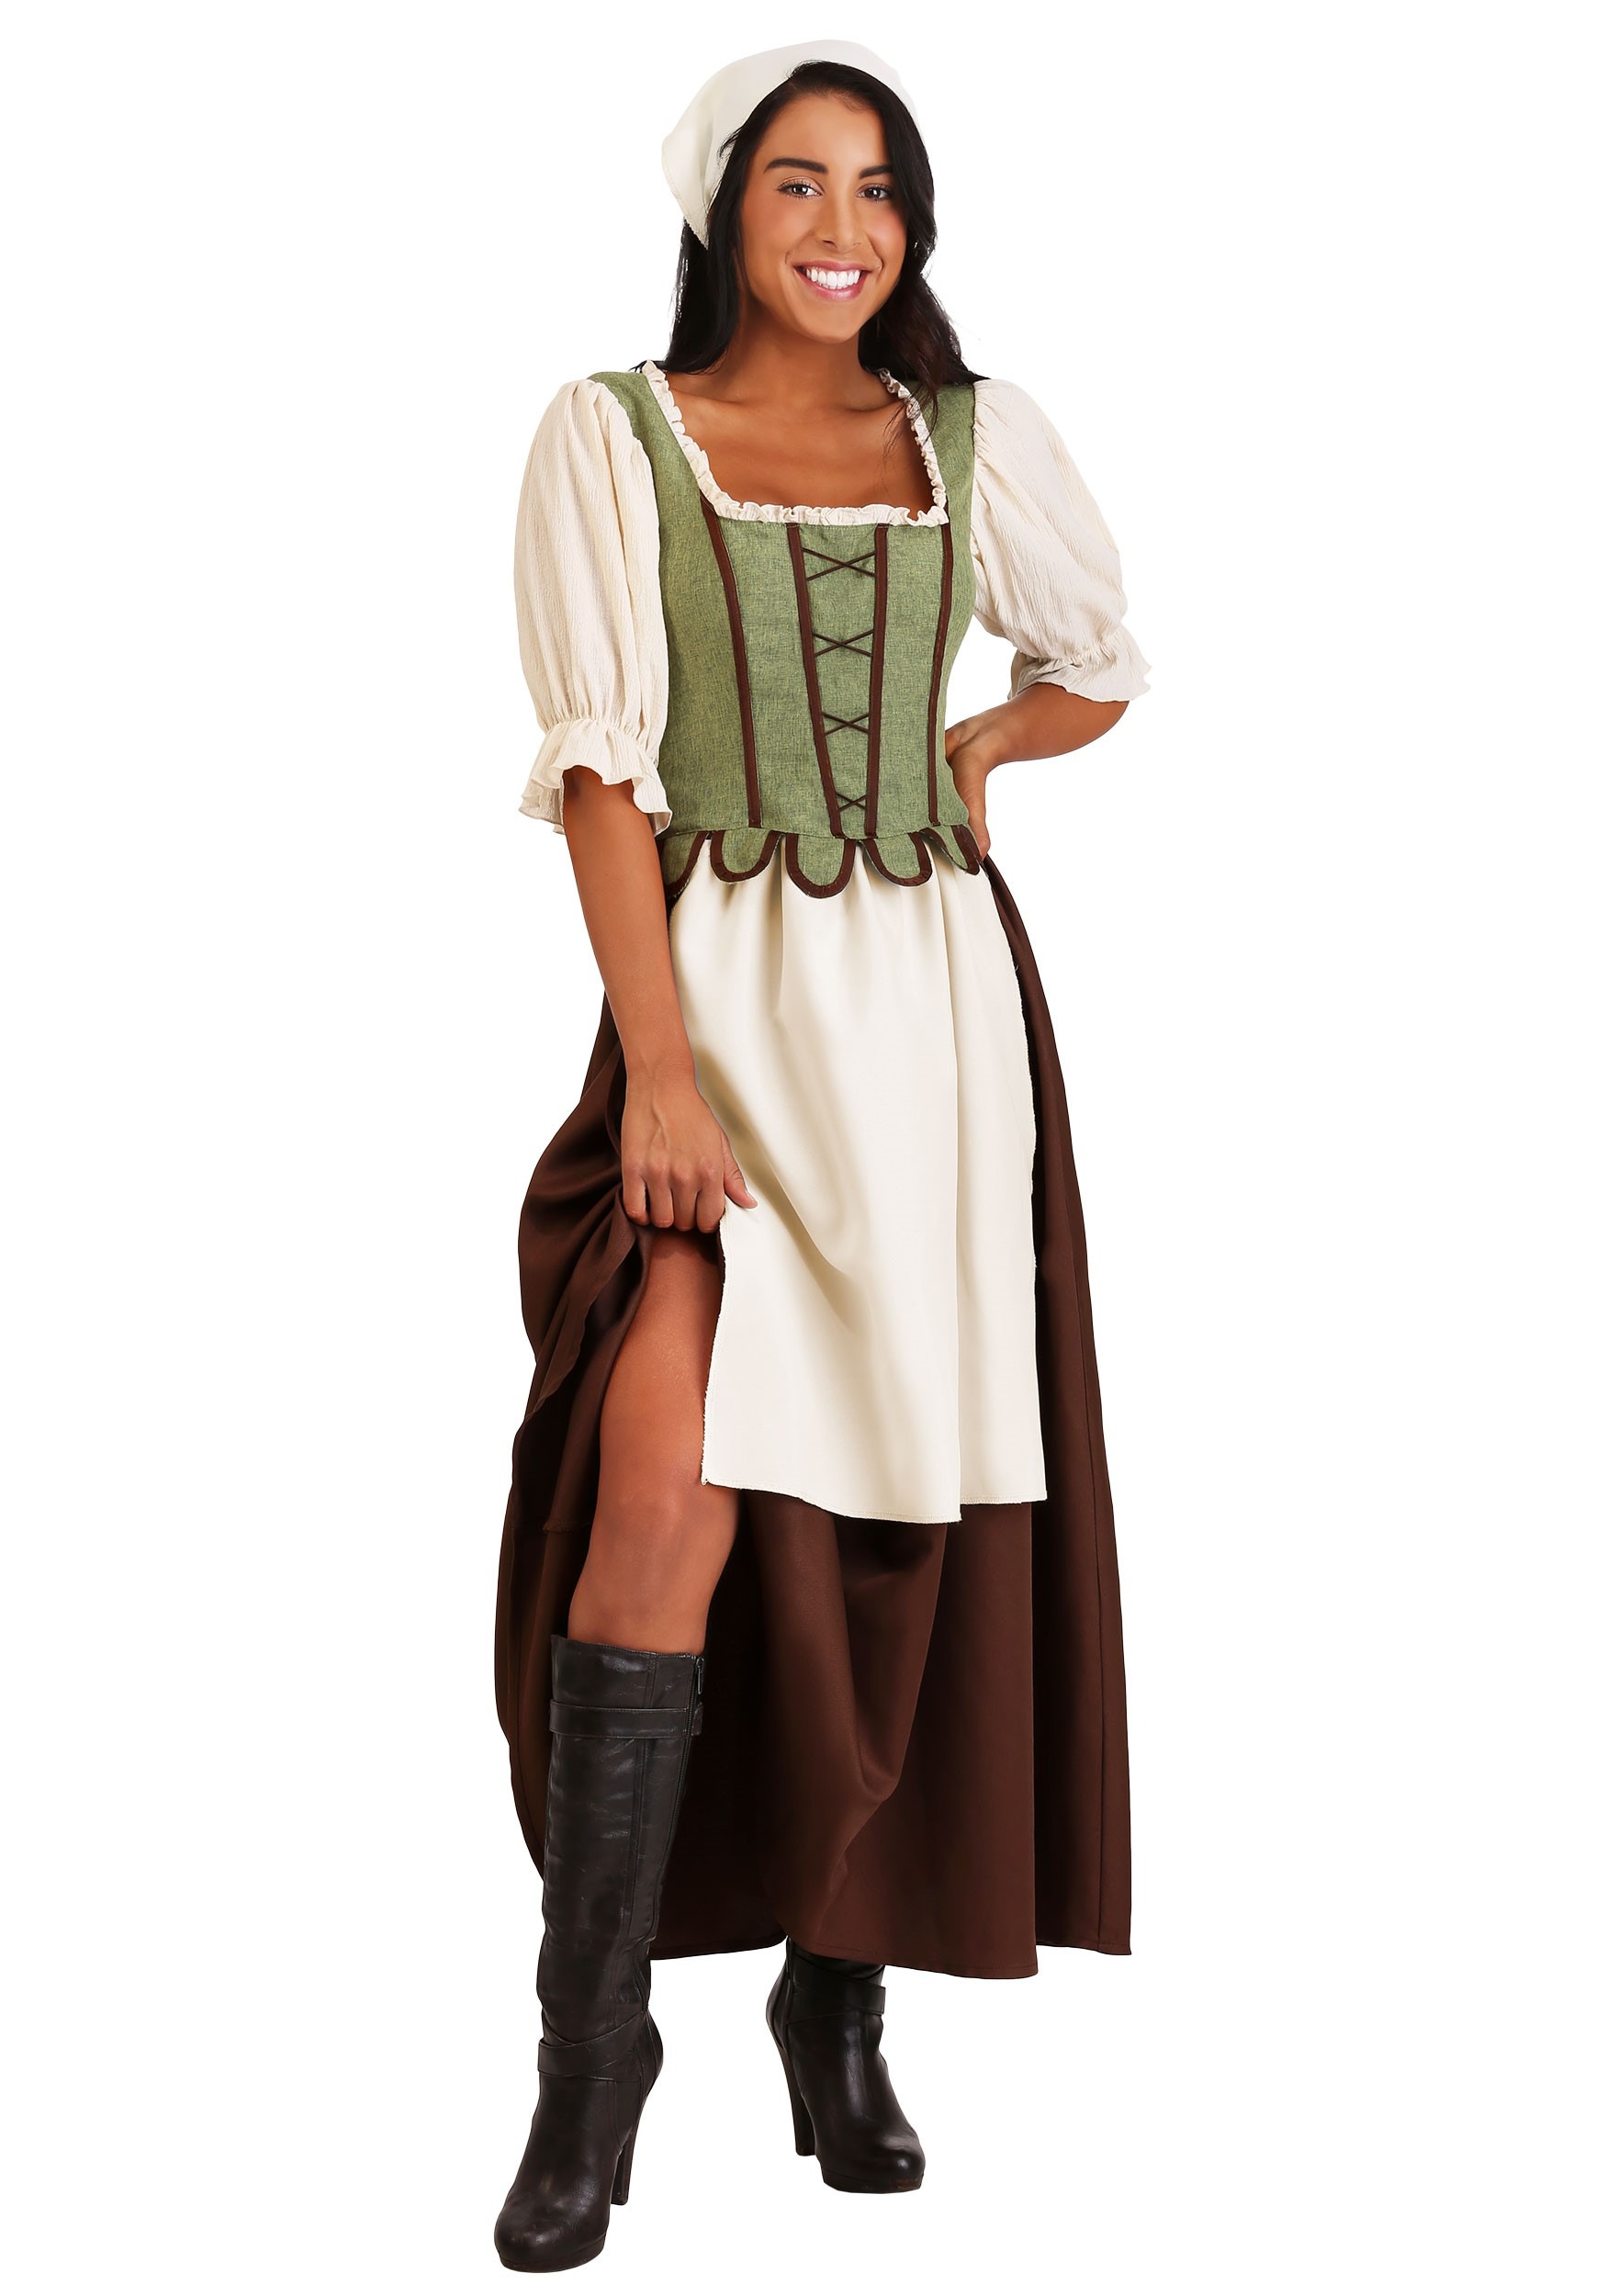 Photos - Fancy Dress Winsun Dress FUN Costumes Women's Medieval Pub Wench Costume Brown/Green FUN7241AD 